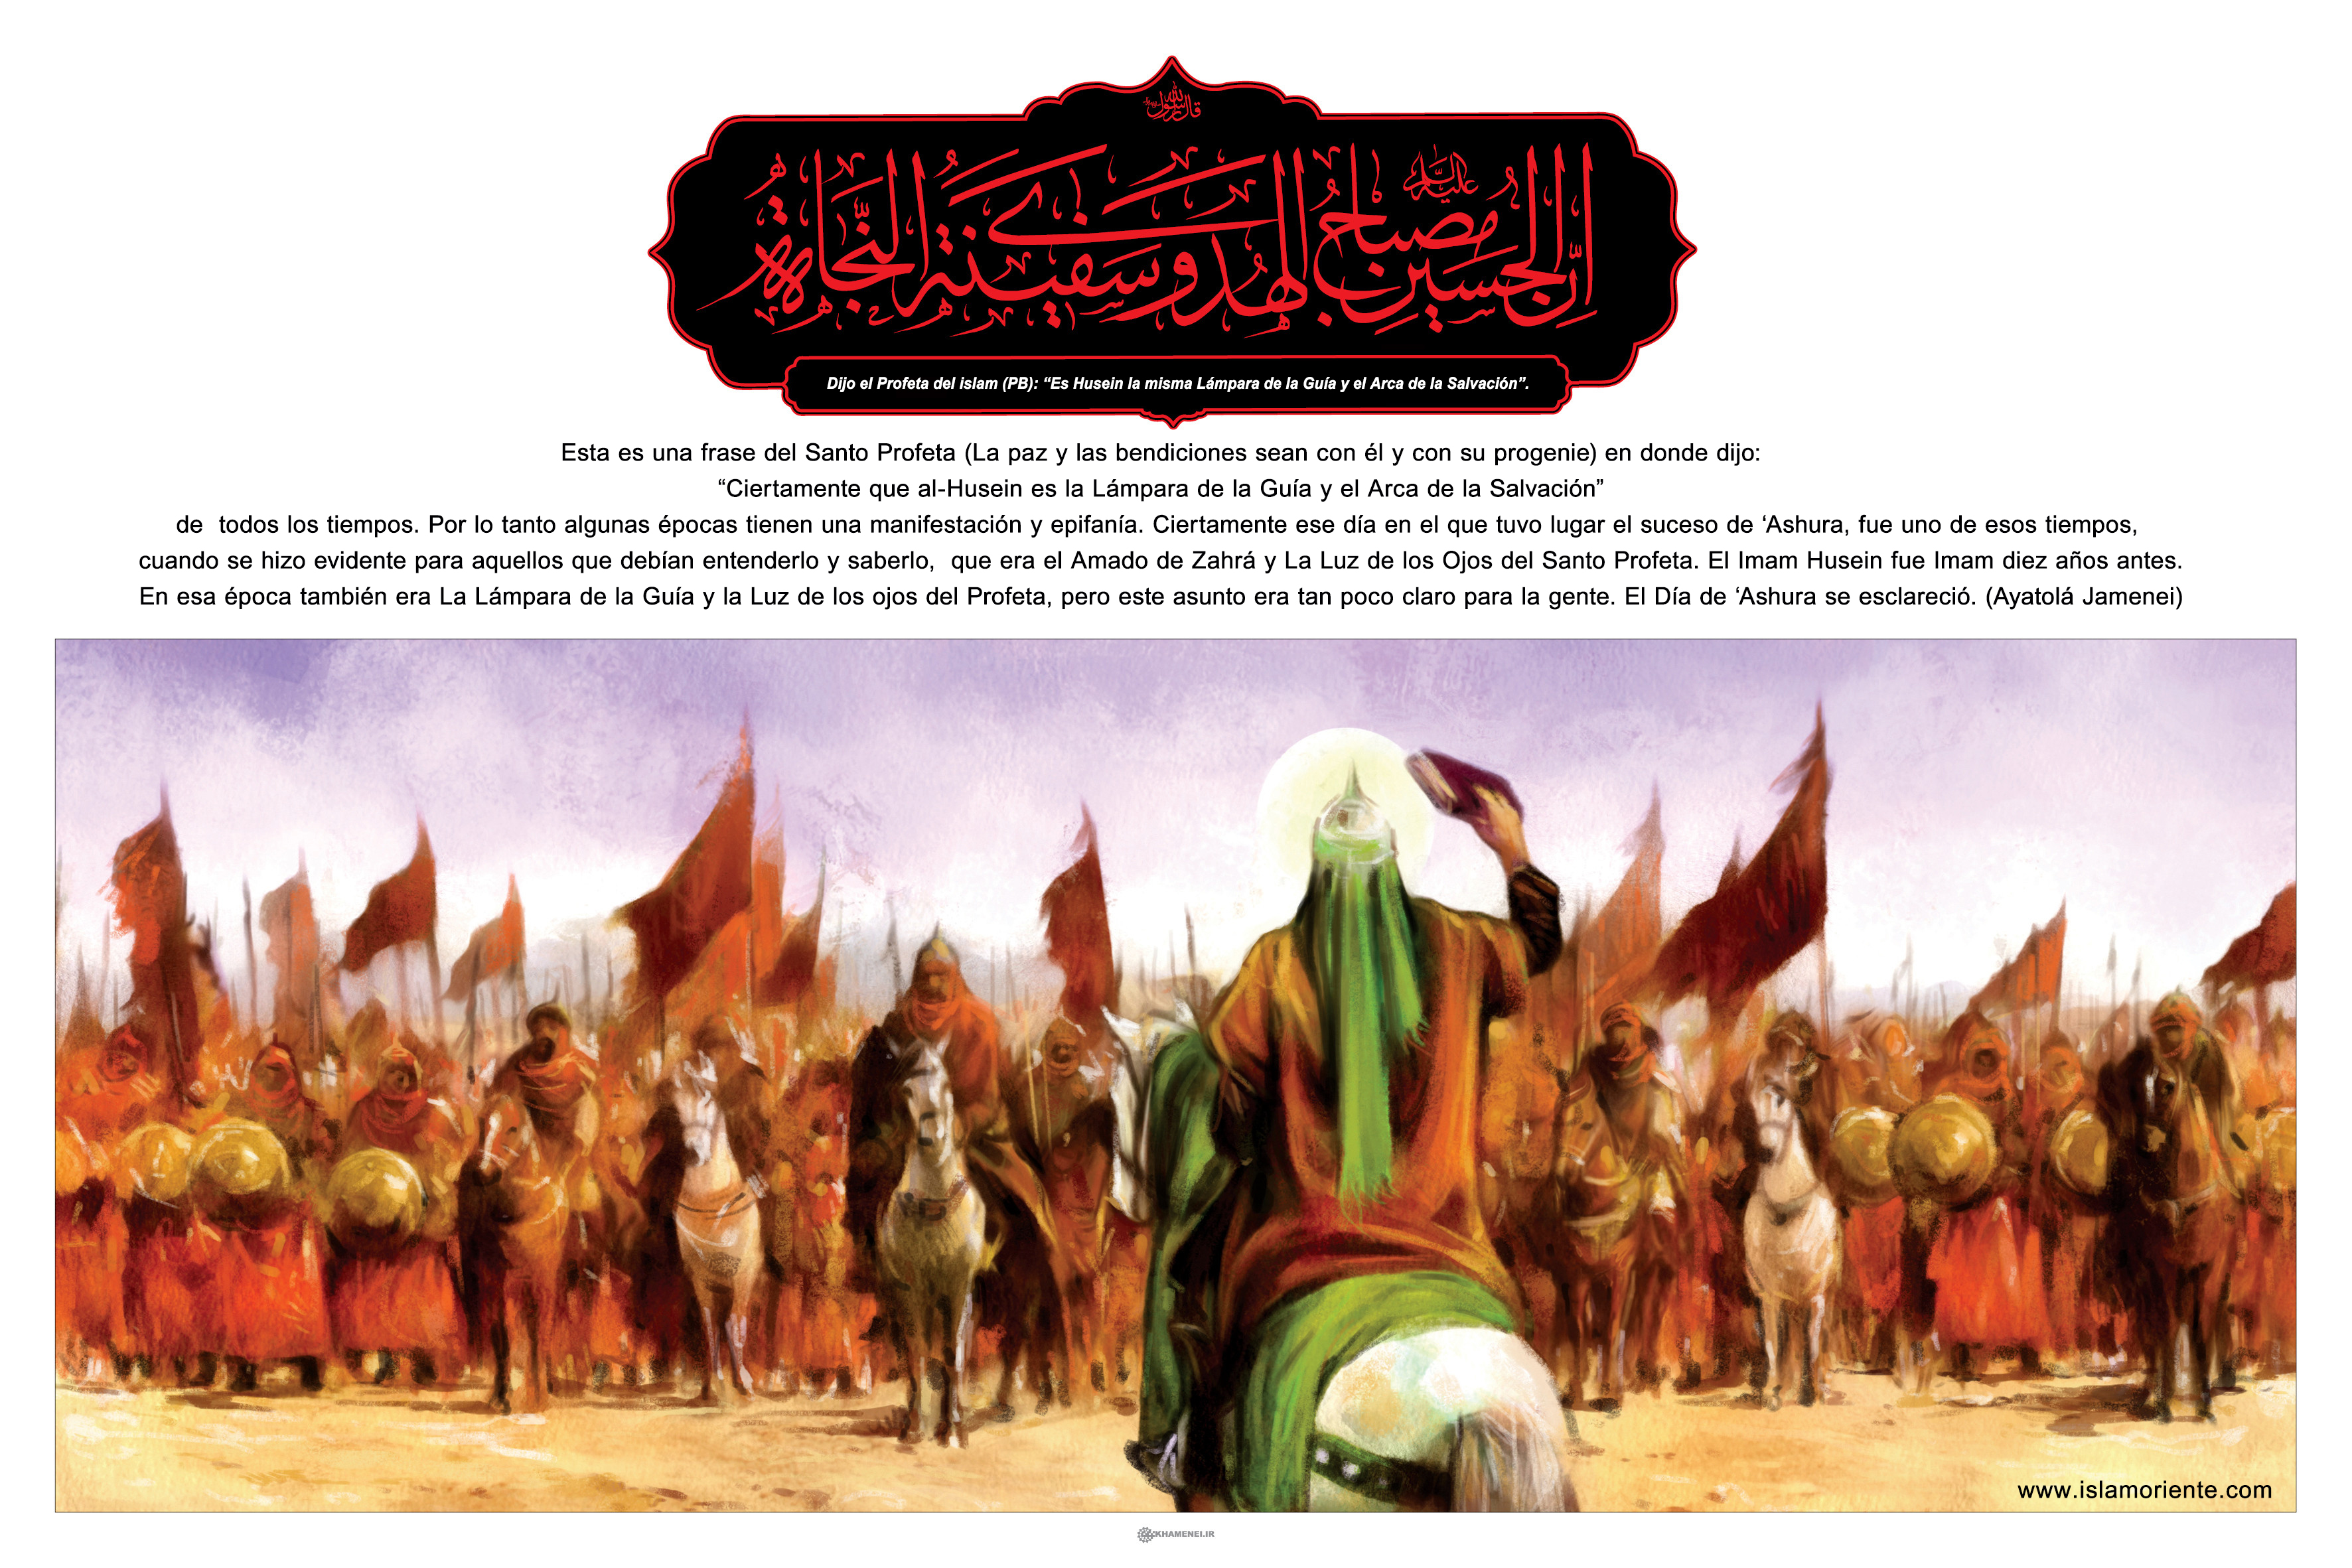 Islamic Poster Is Hussein P The Same Lamp Guide And The Ark Of Salvation Galeria De Arte Islamico Y Fotografia